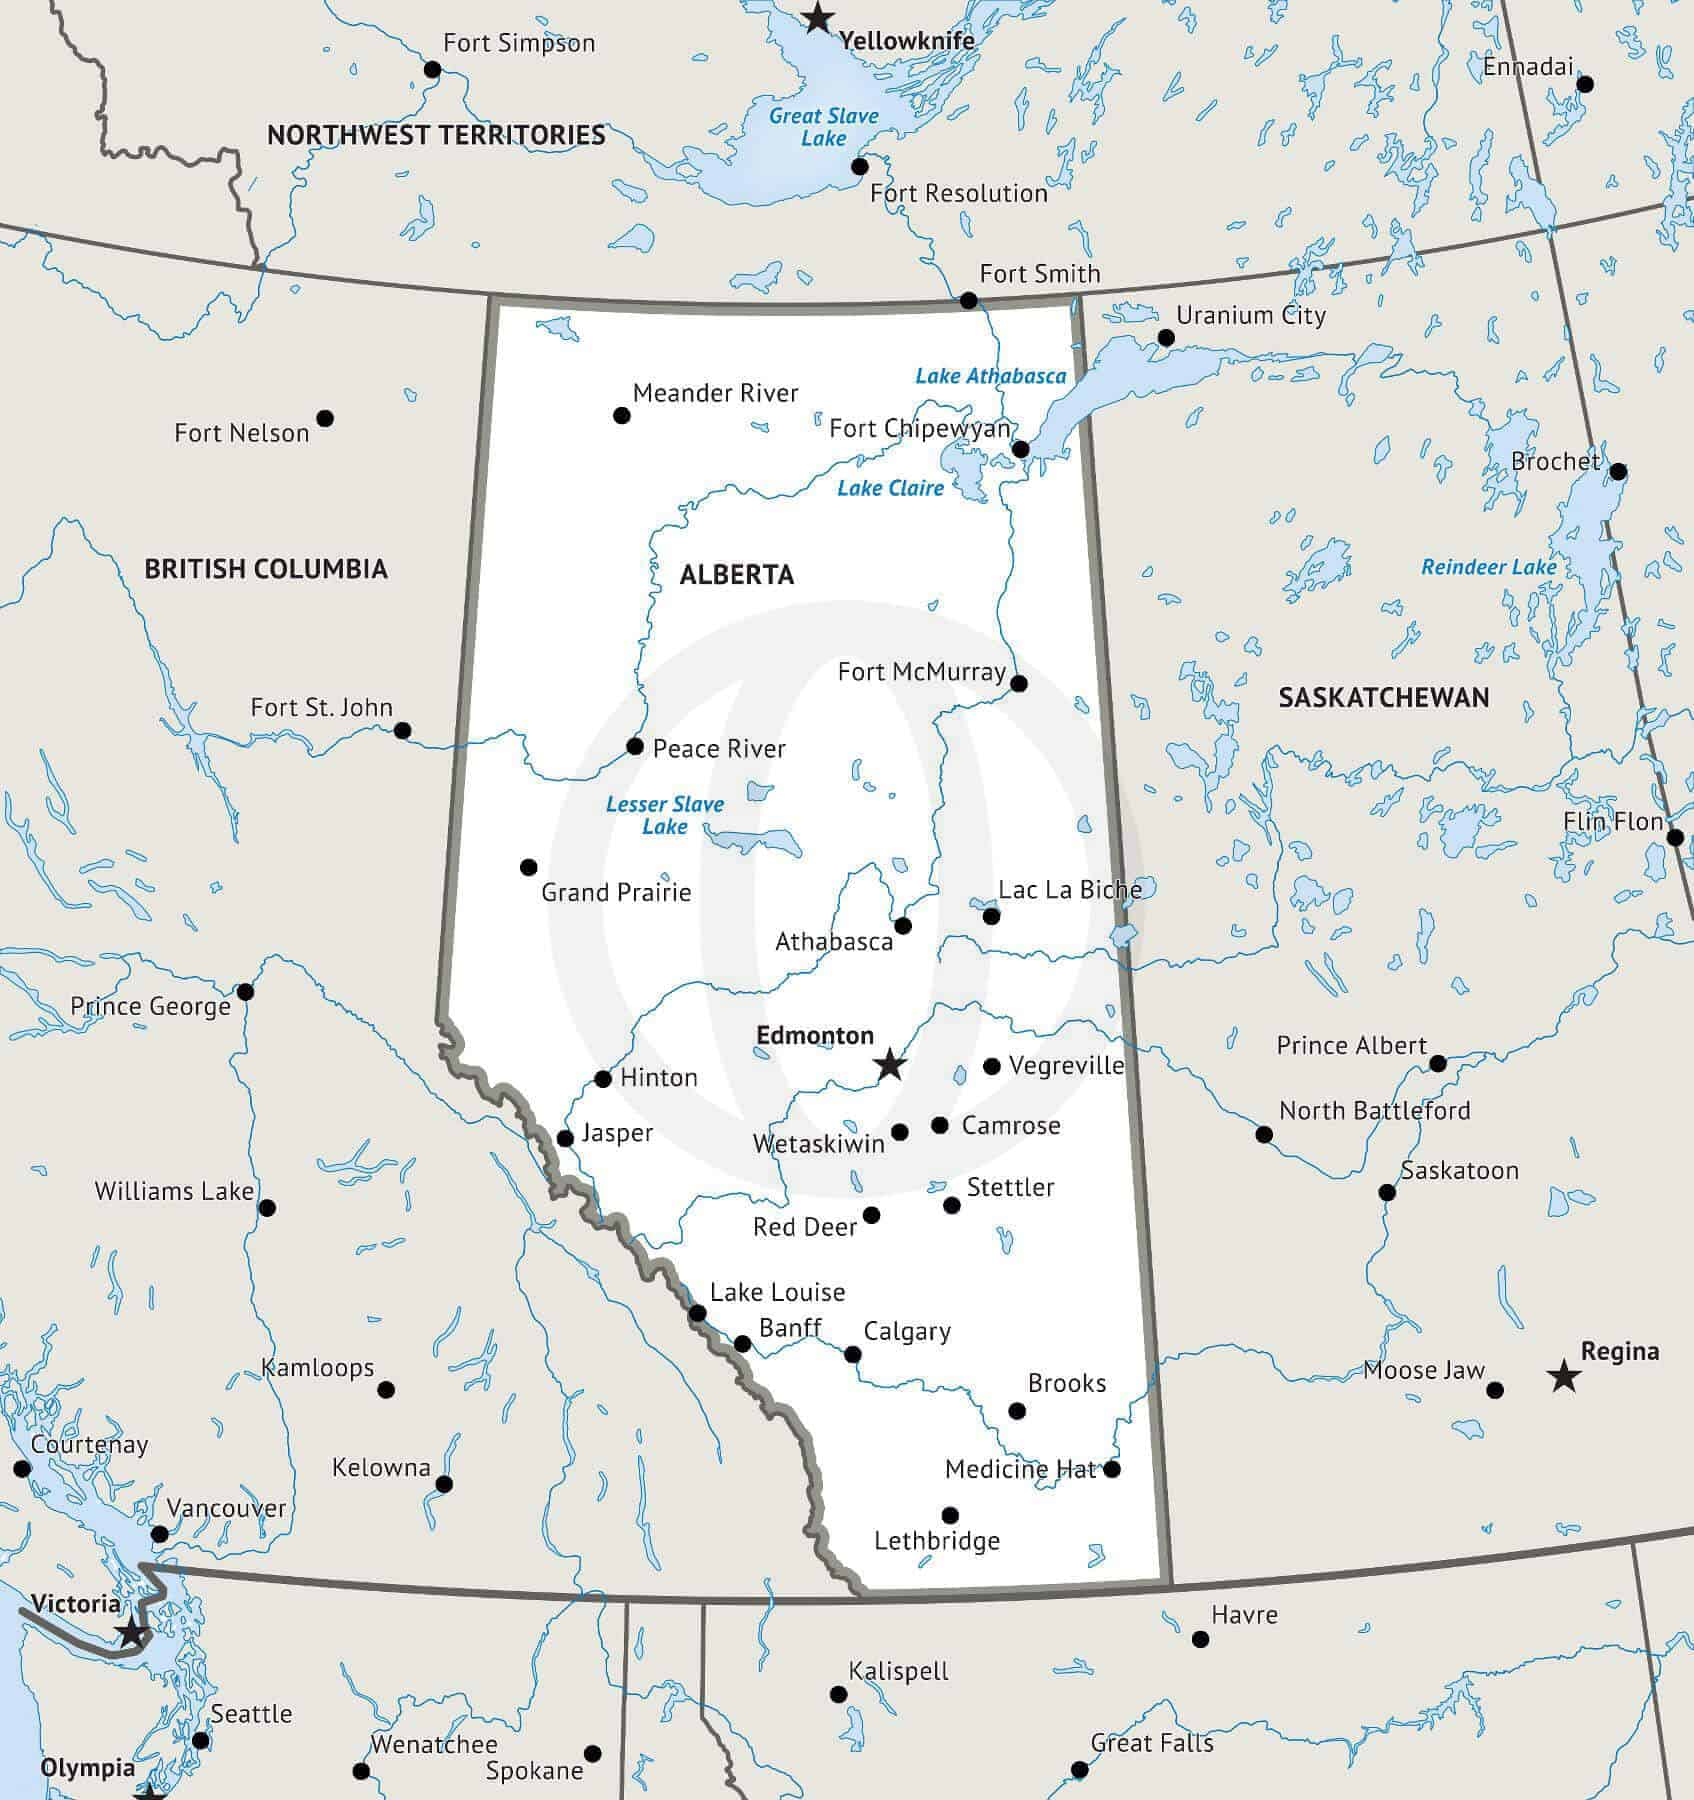 Alberta Maps Facts World Atlas - vrogue.co